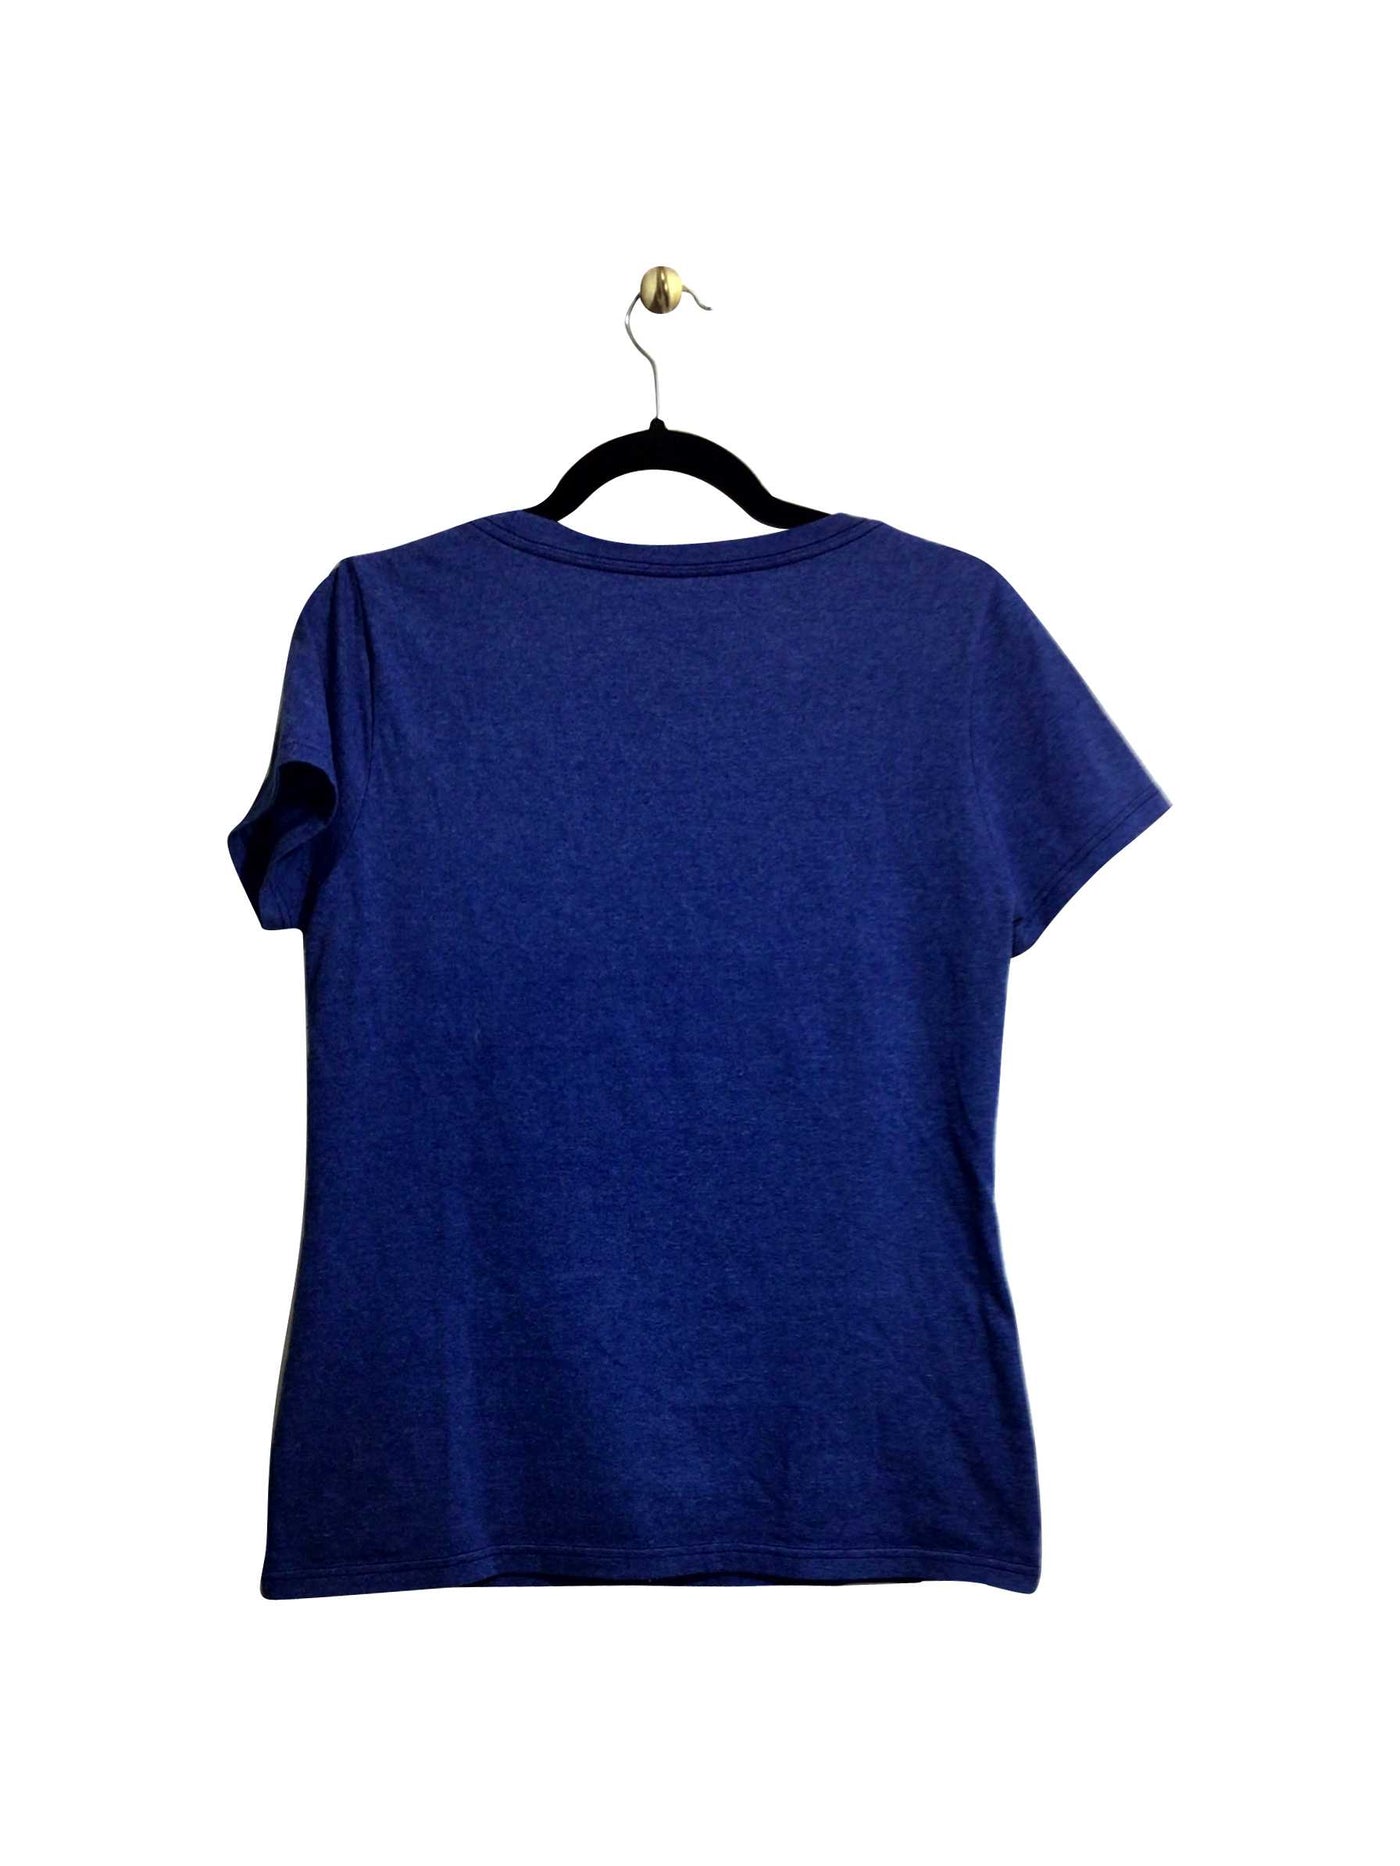 DISNEY Regular fit T-shirt in Blue - Size M | 9.99 $ KOOP